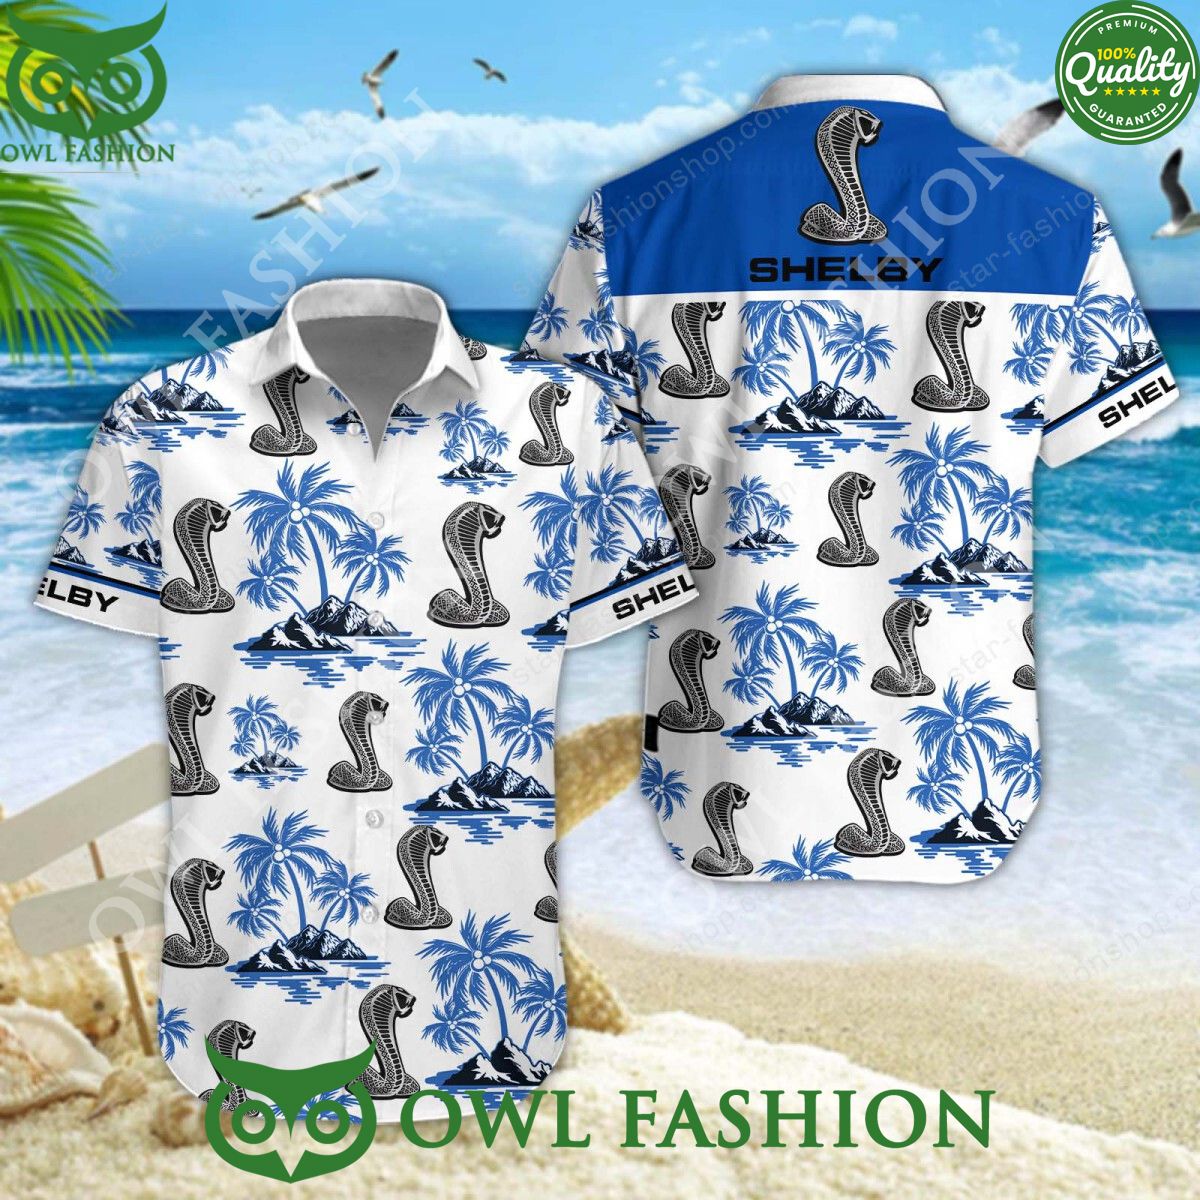 ford shelby automobile brand logo hawaiian shirt and short 1 Wl41C.jpg